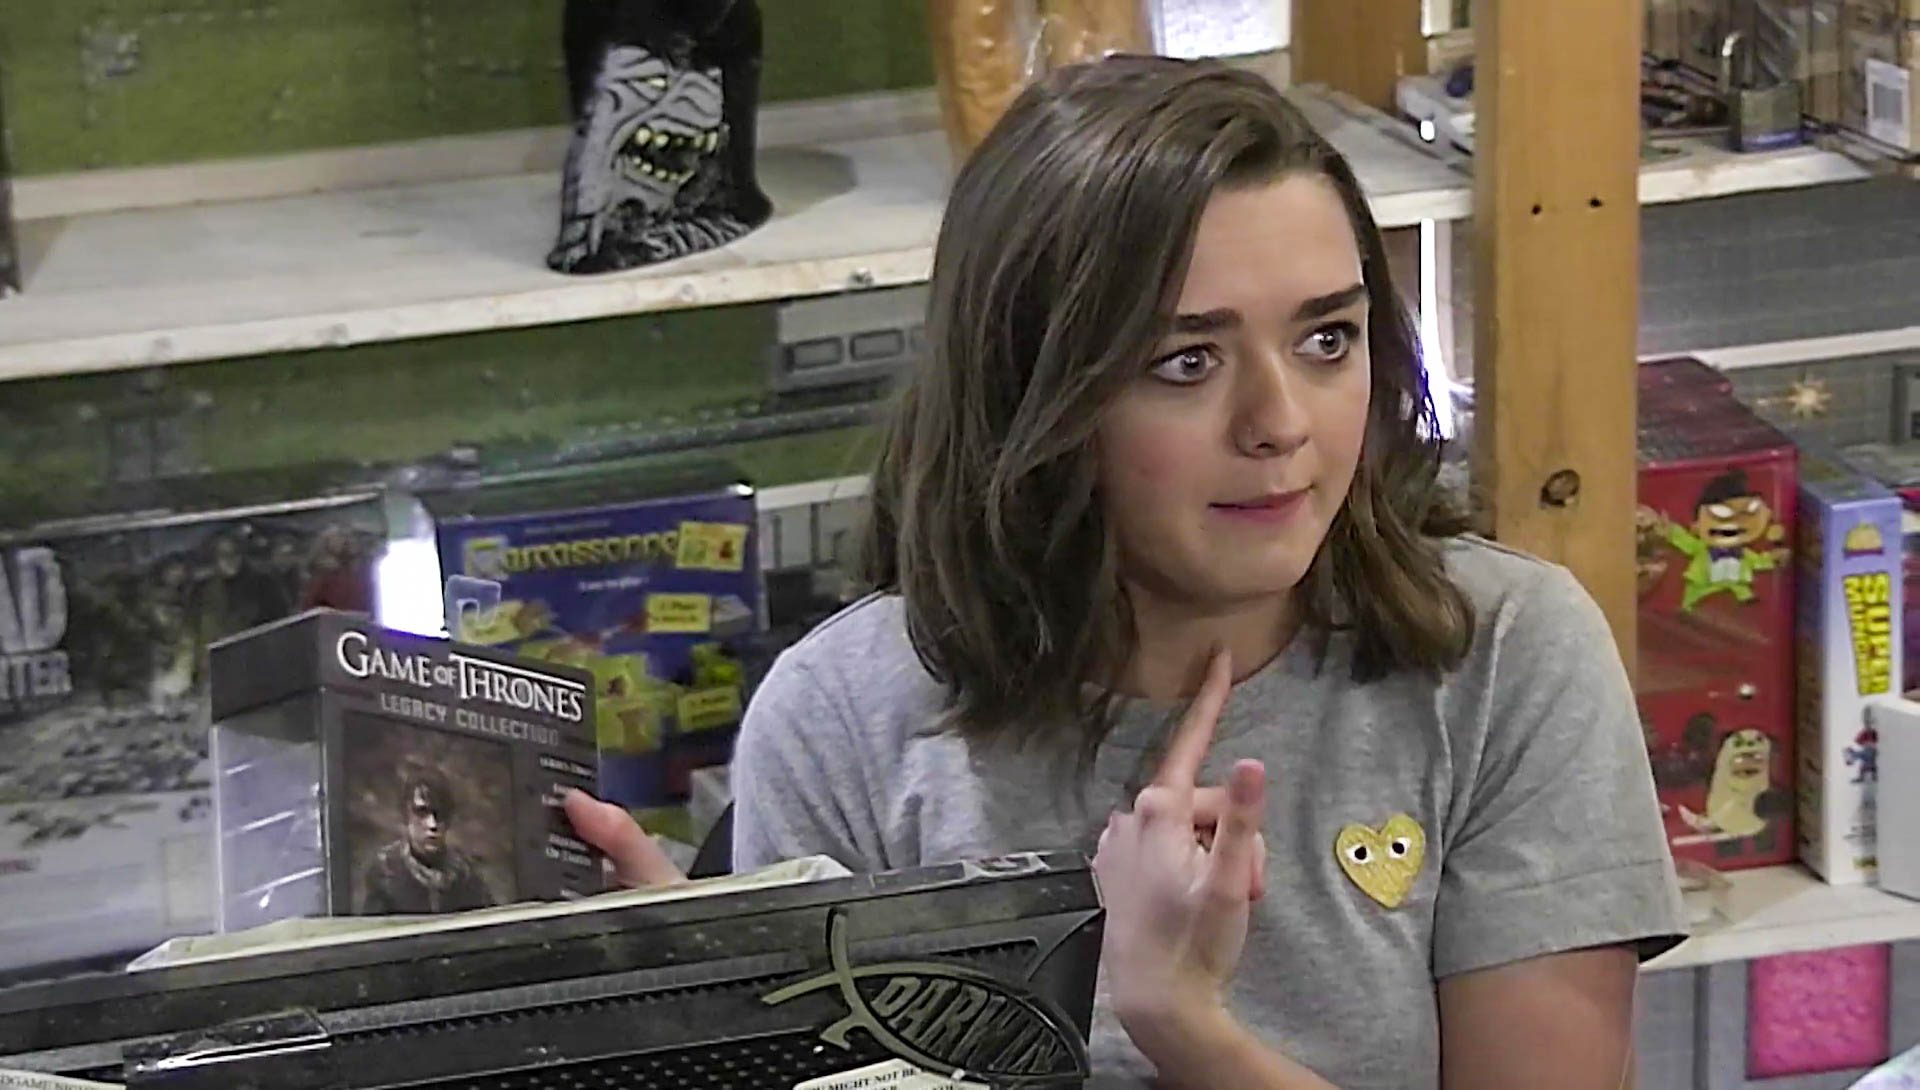 WATCH: Maisie Williams pranks ‘Game of Thrones’ fans as a shop clerk